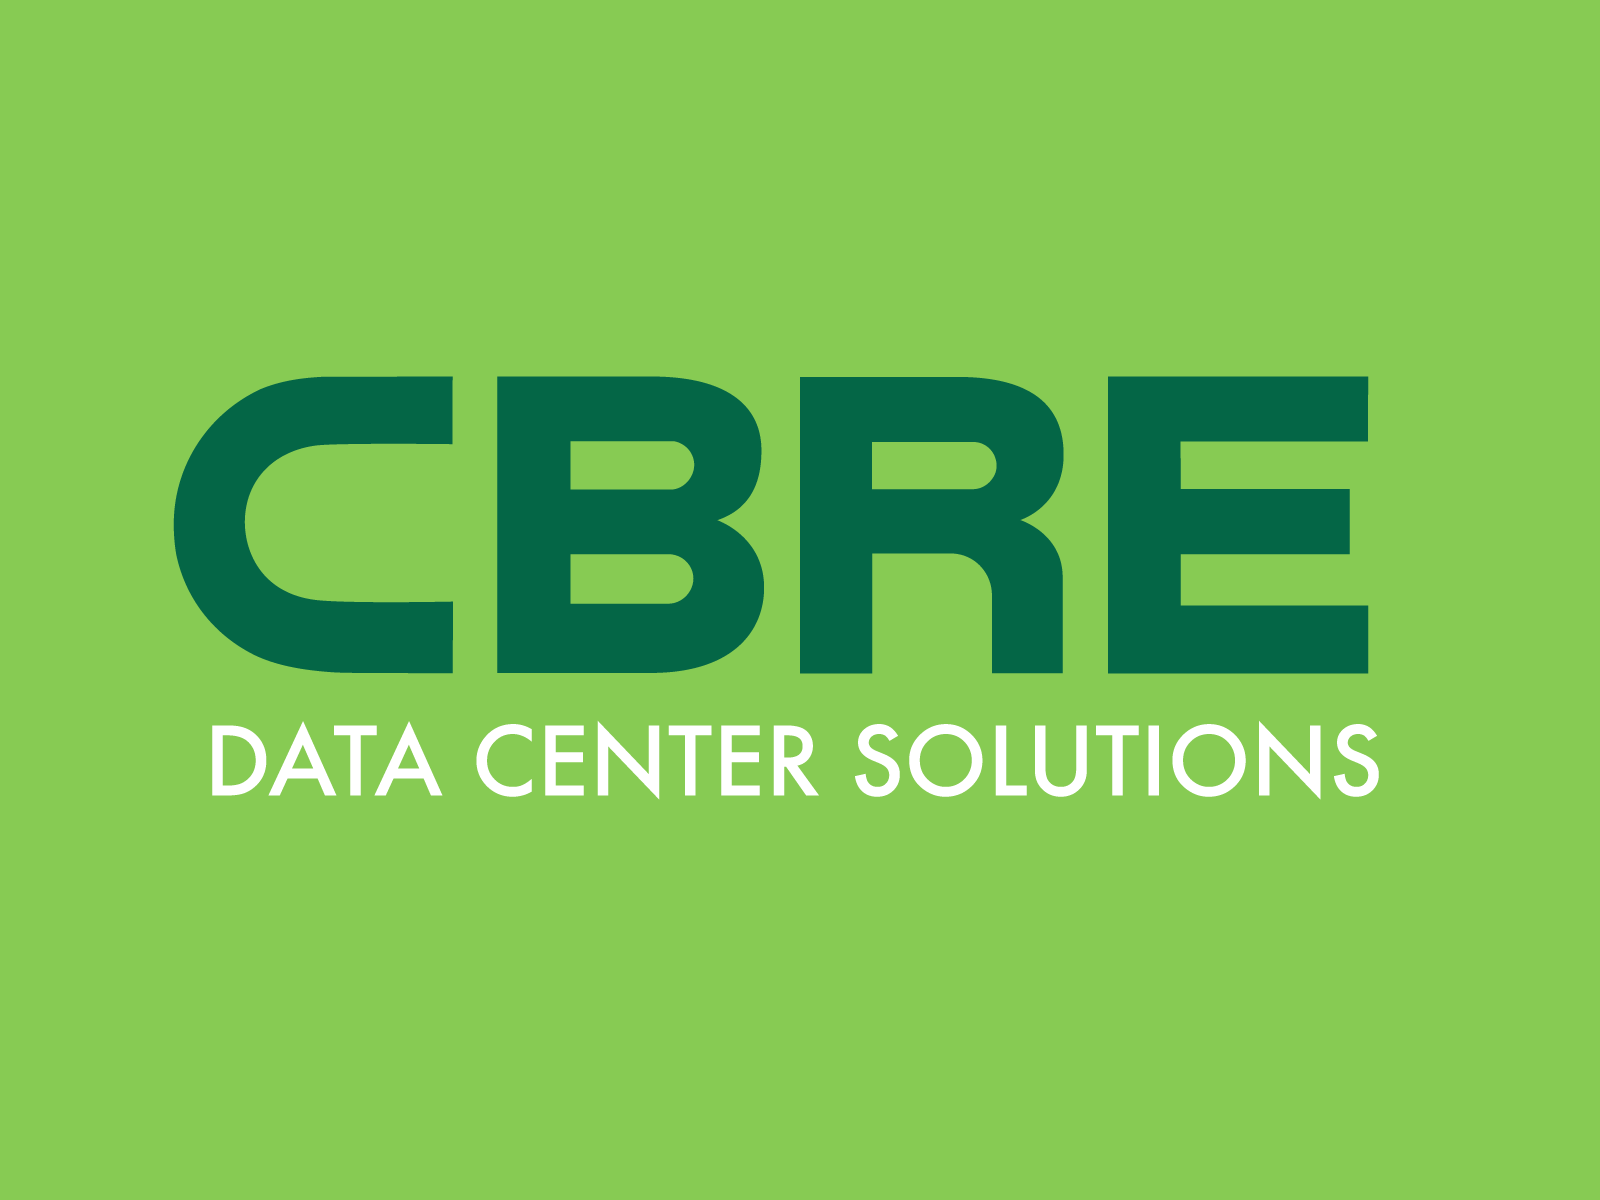 CBRE Data Center Solutions